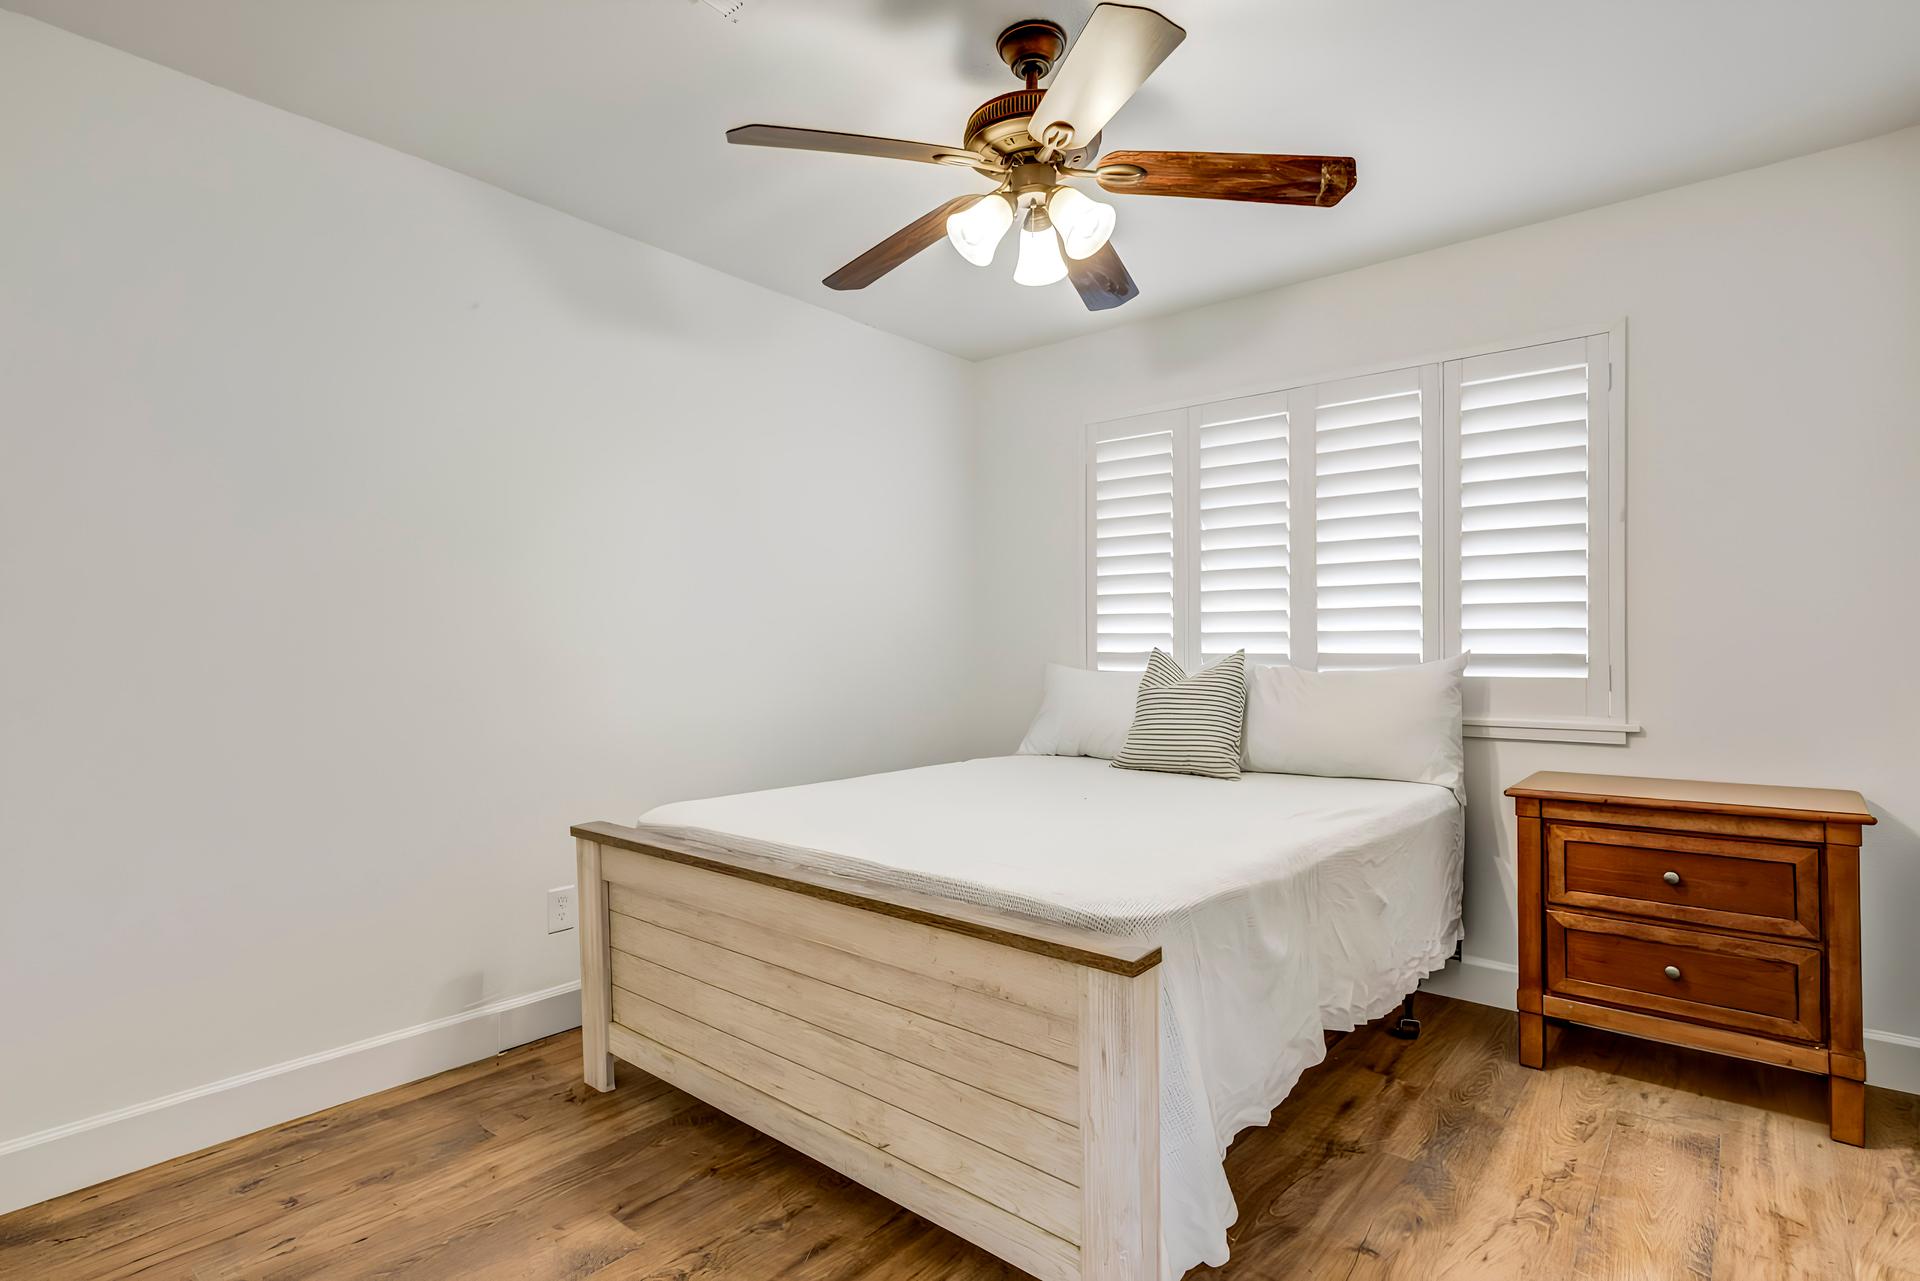 bedroom, detected:ceiling fan, window blind, bed